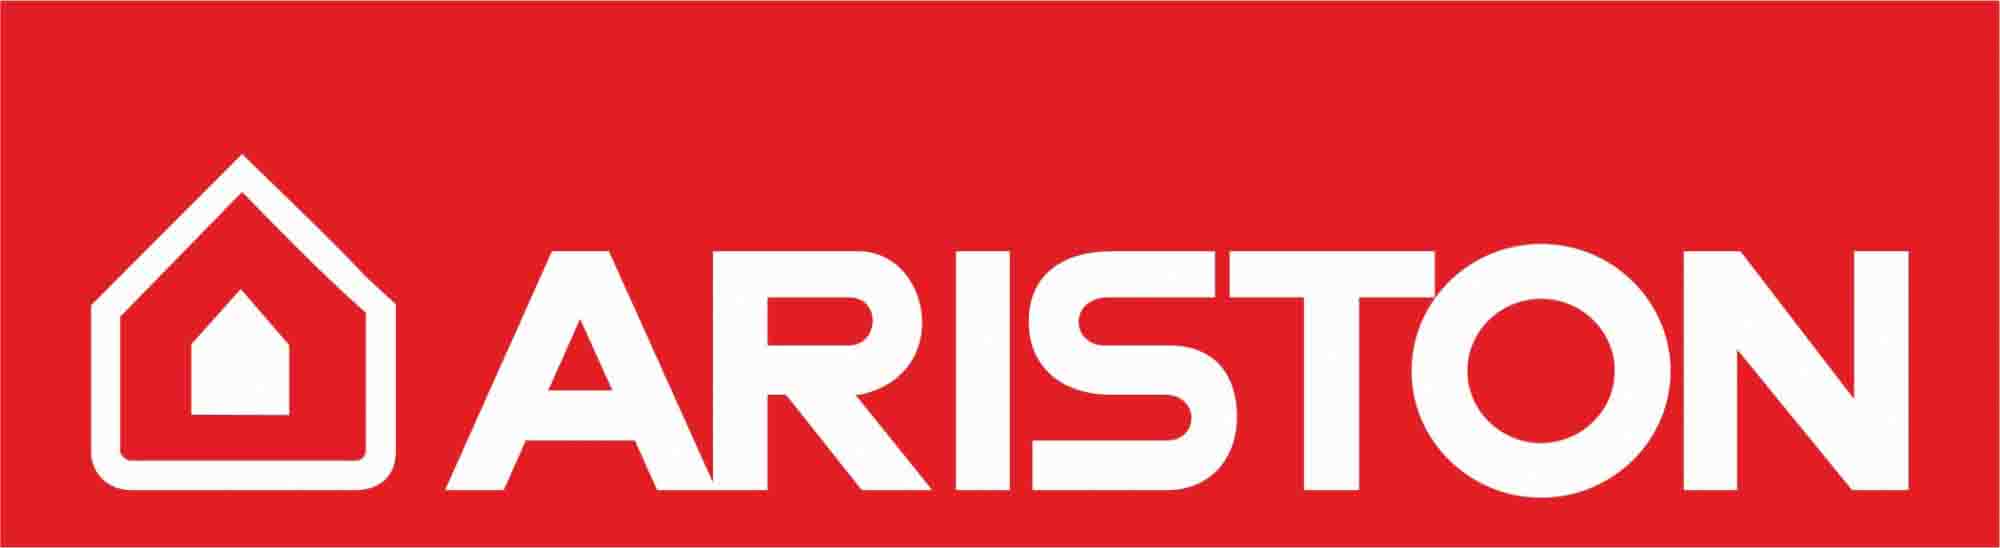 Ariston фирма. Ariston котел лого. Аристон котлы логотип. Арис лого. Логотипы газовых котлов.